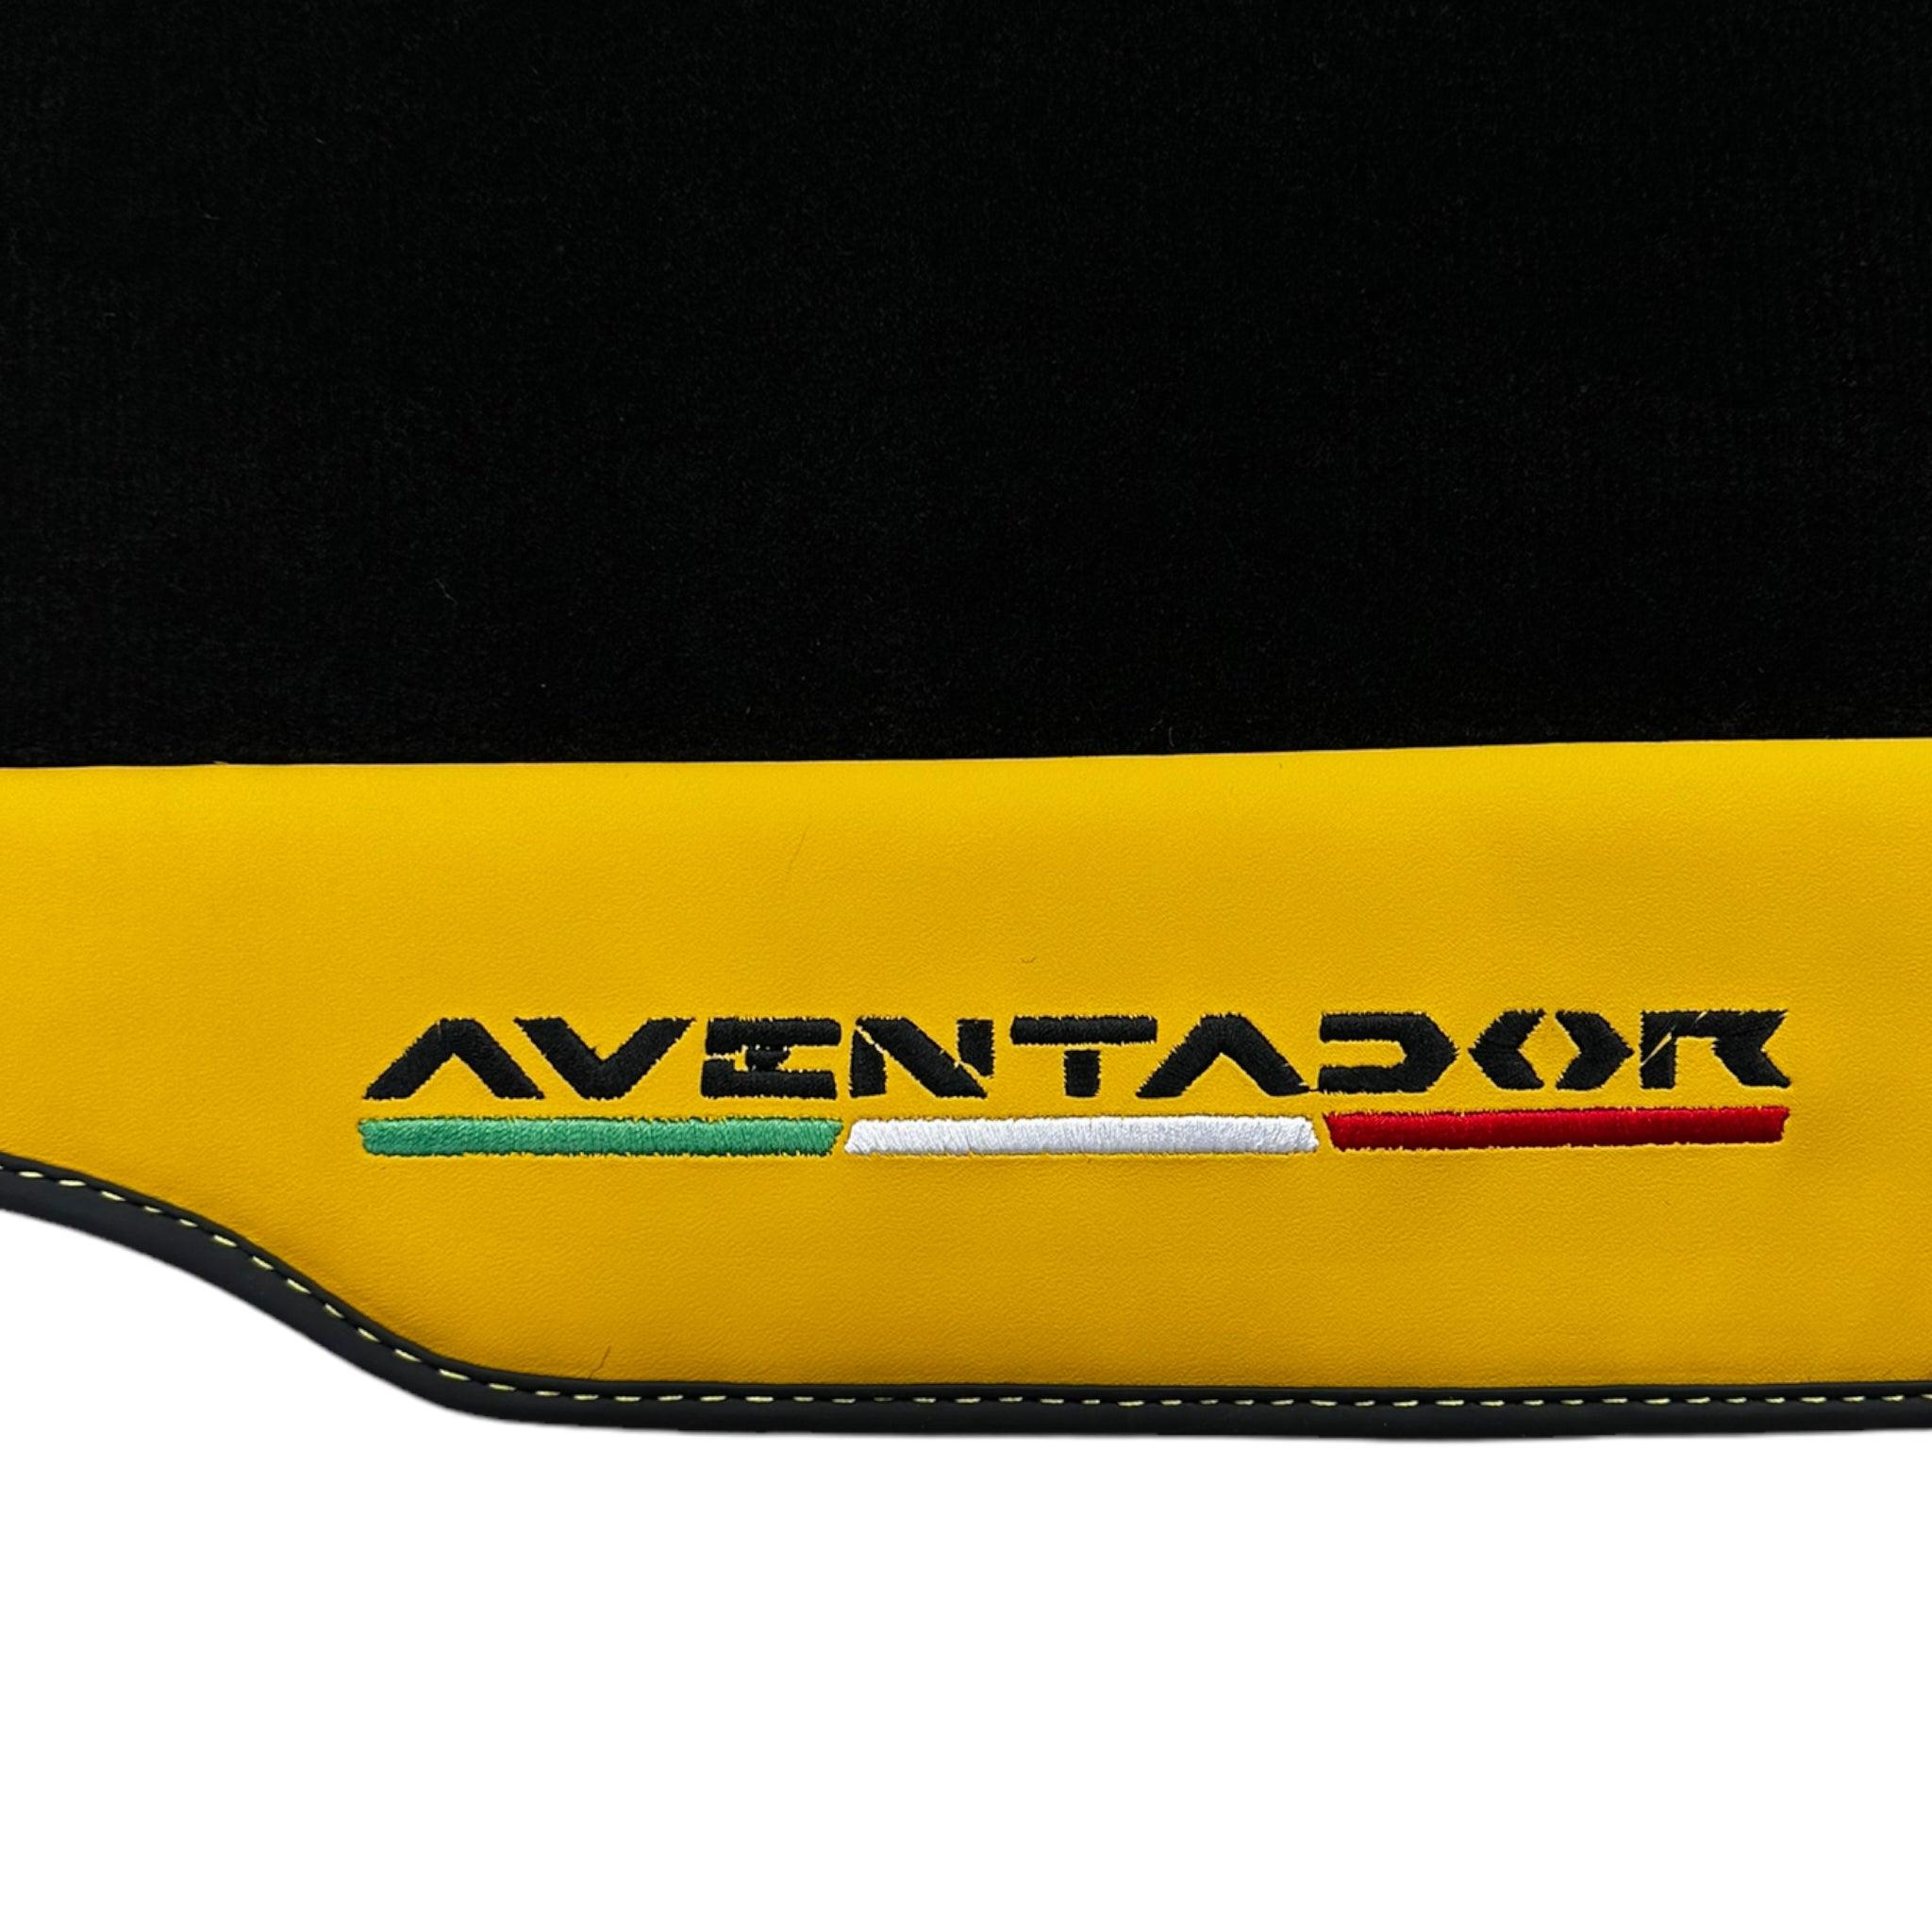 Black Floor Mats for Lamborghini Aventador with Yellow (Giallo Taurus) Nappa Leather